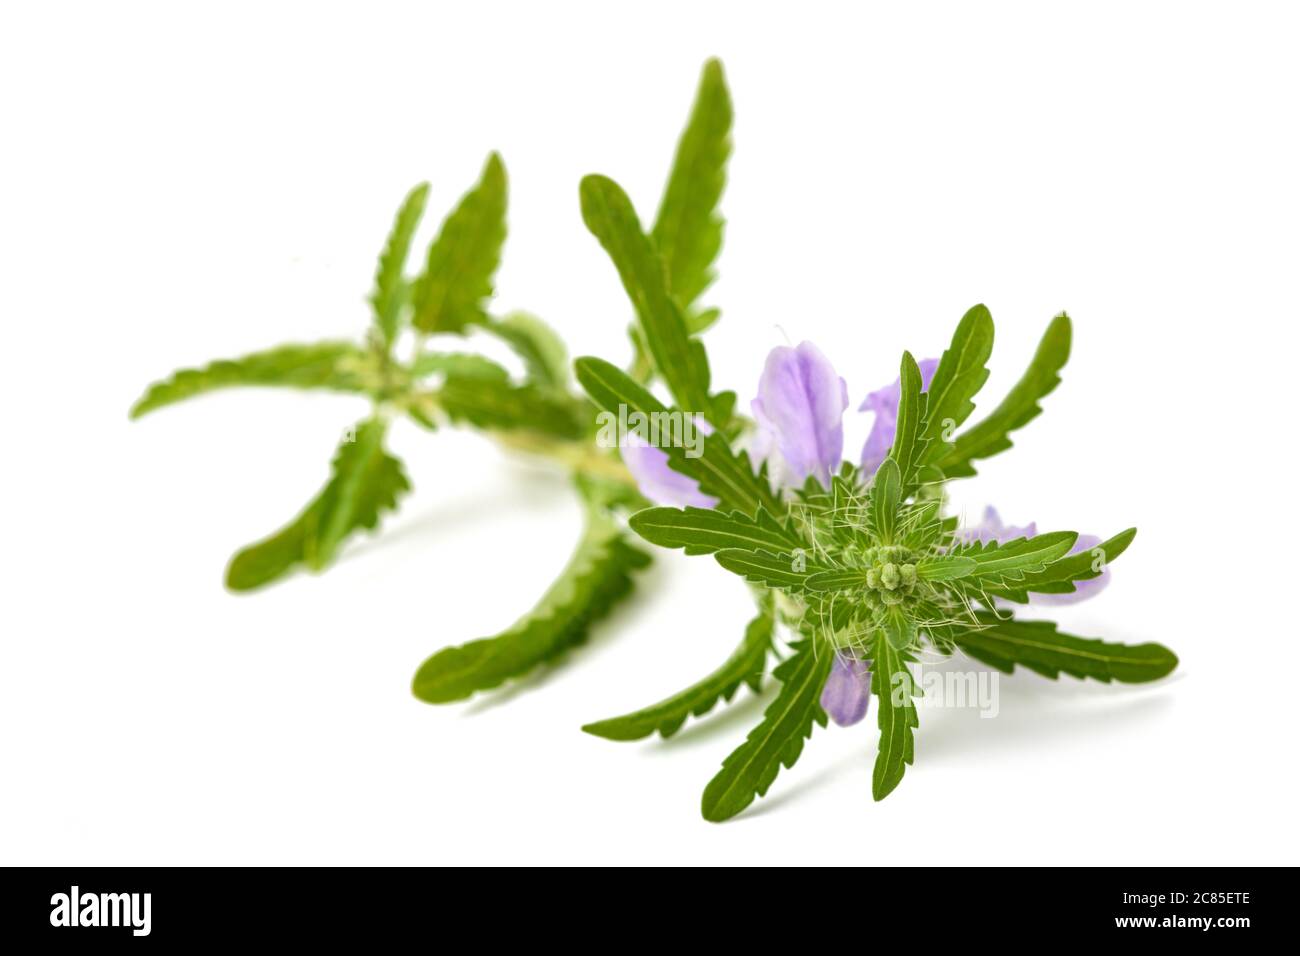 moldavian dragonhead plant isolated on white background Stock Photo